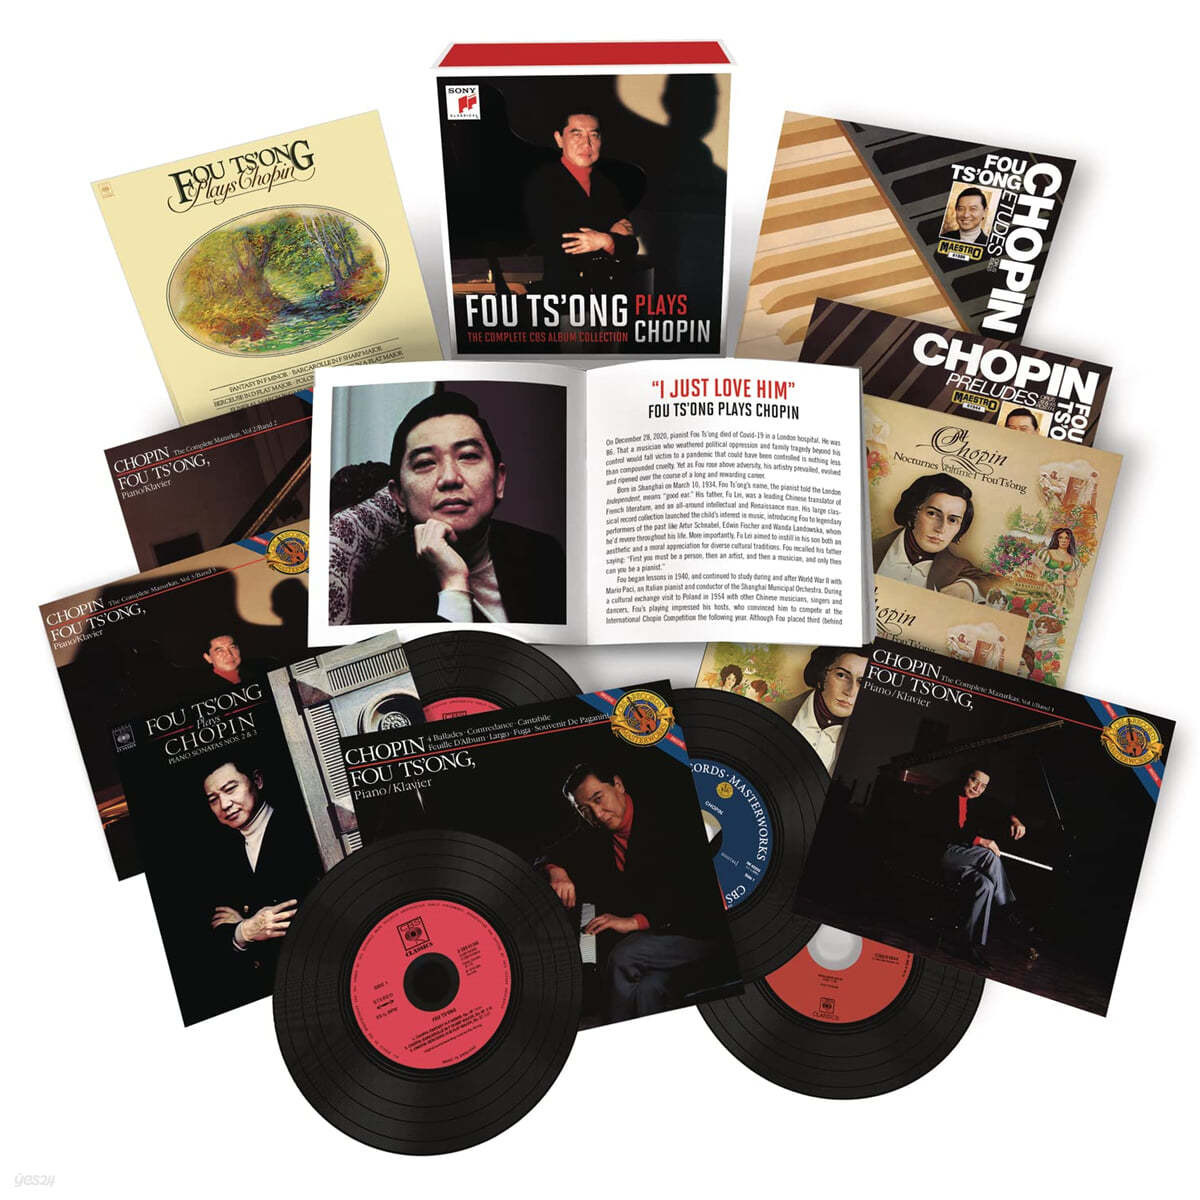 Fou Ts'ong 후총 CBS 쇼팽 녹음 전집 (Chopin: The Complete CBS Album Collection) 